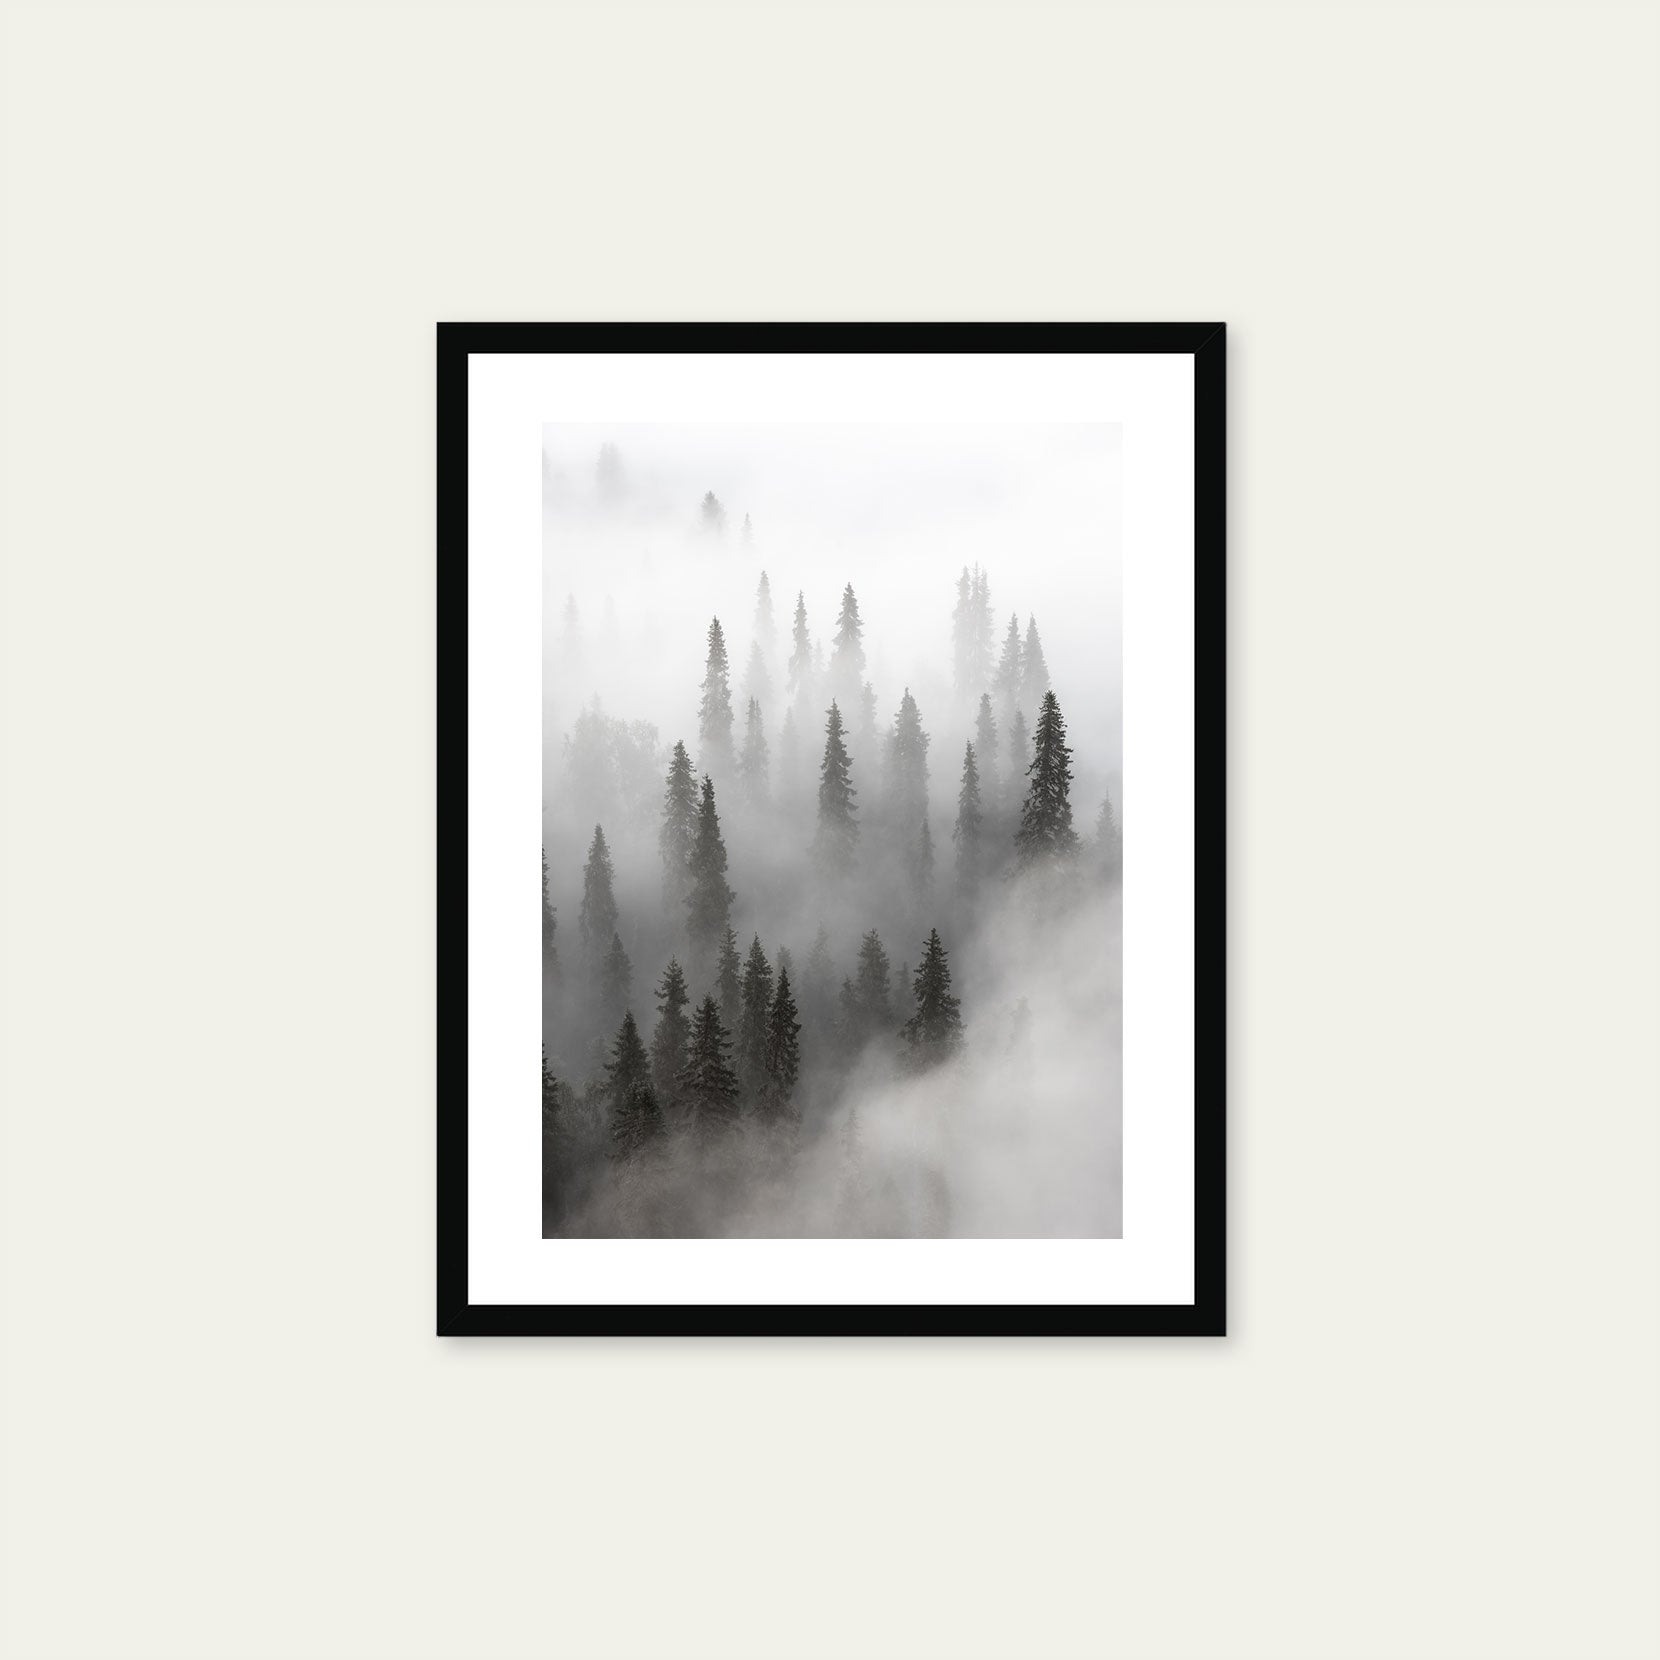 A black framed print of a forest with lingering fog